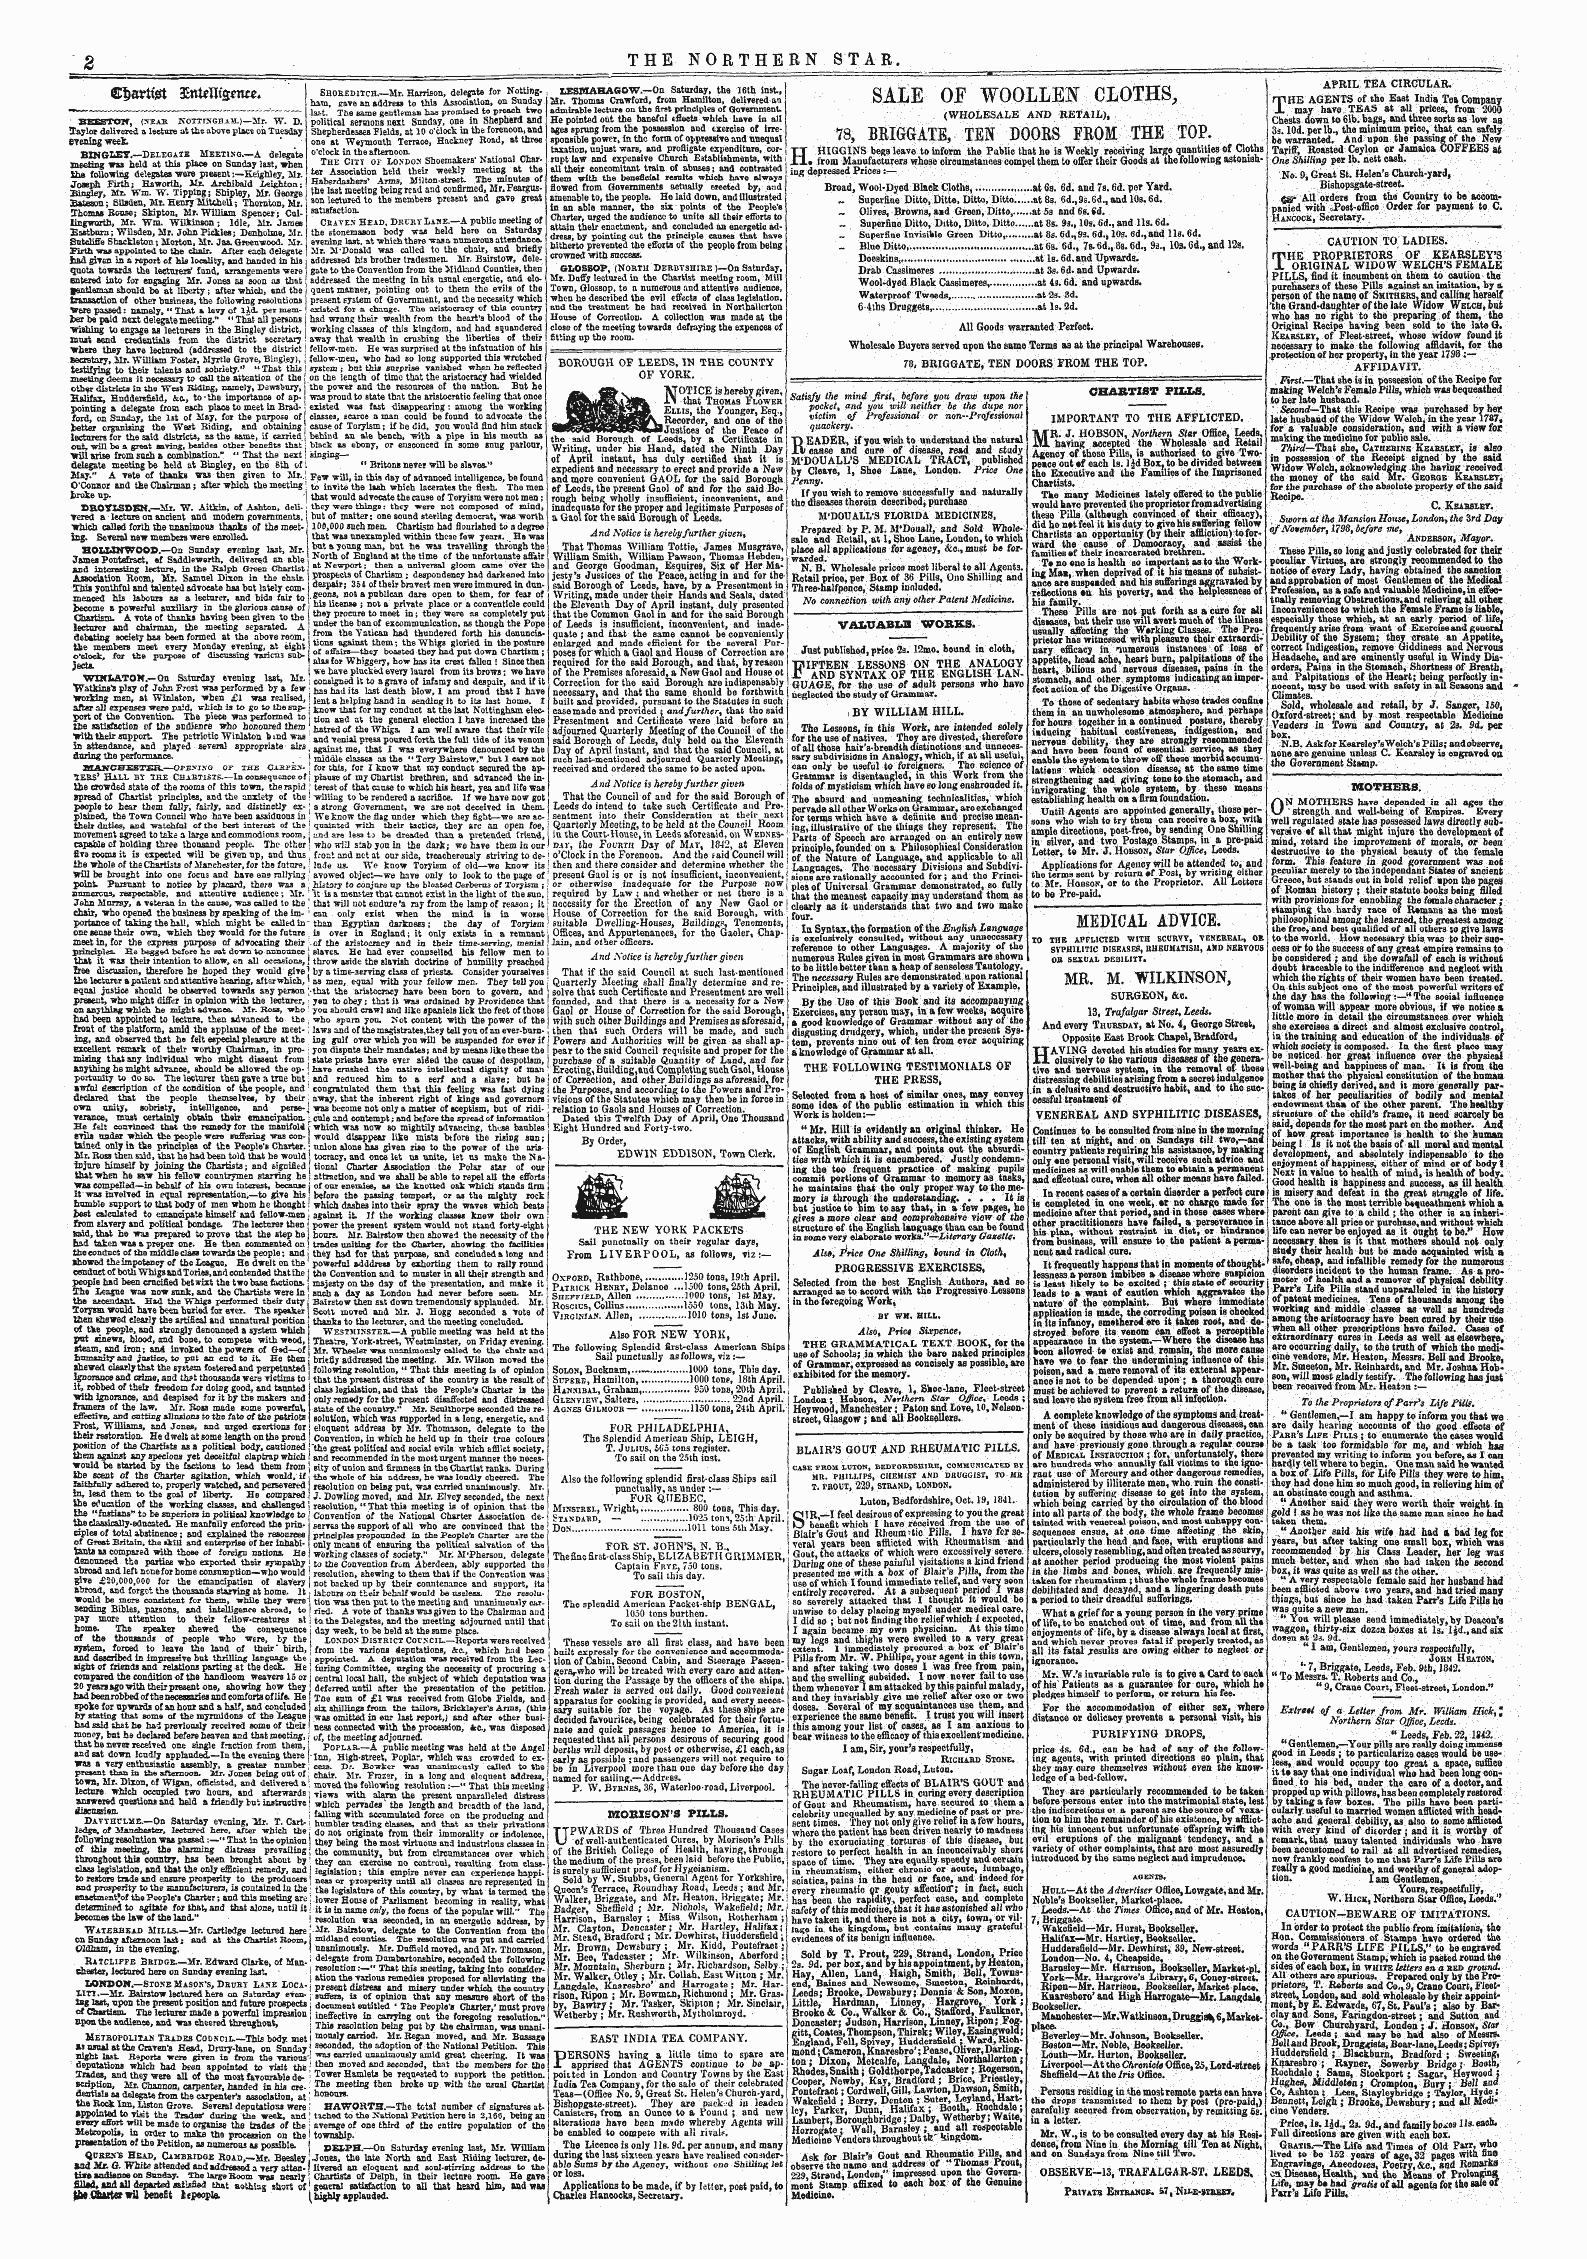 Northern Star (1837-1852): jS F Y, 4th edition: 2